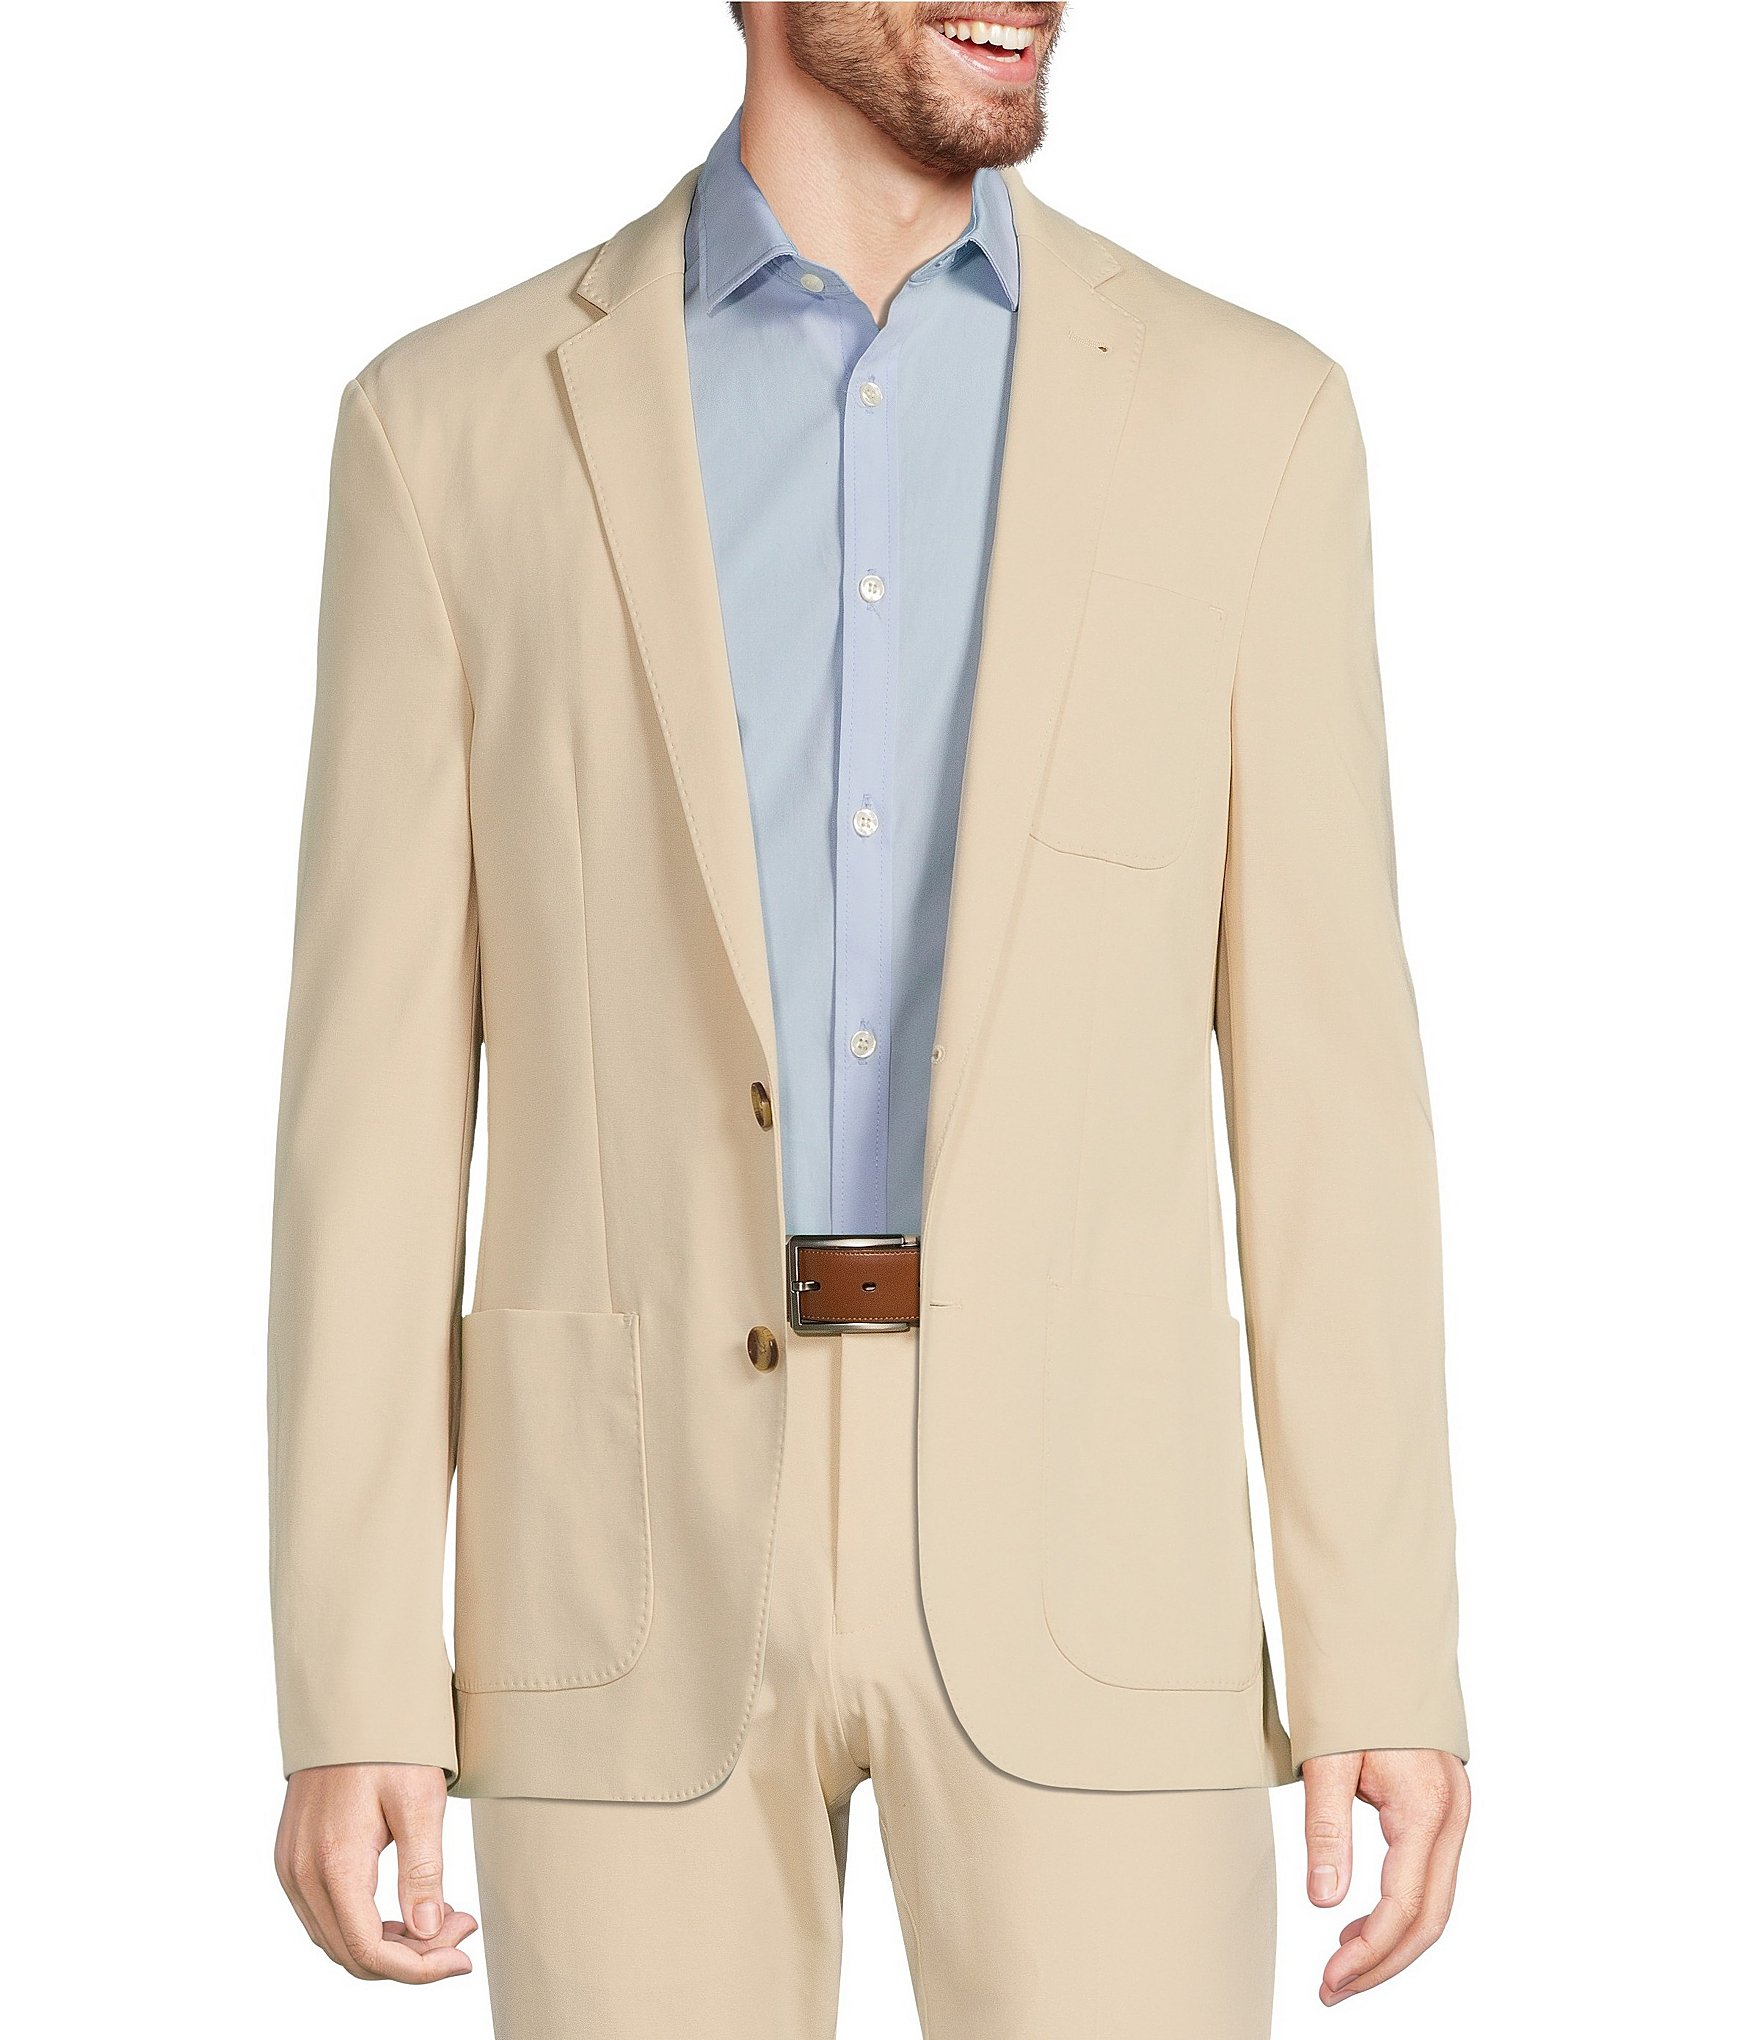 Athens Burgundy Suit Jacket (Separates)